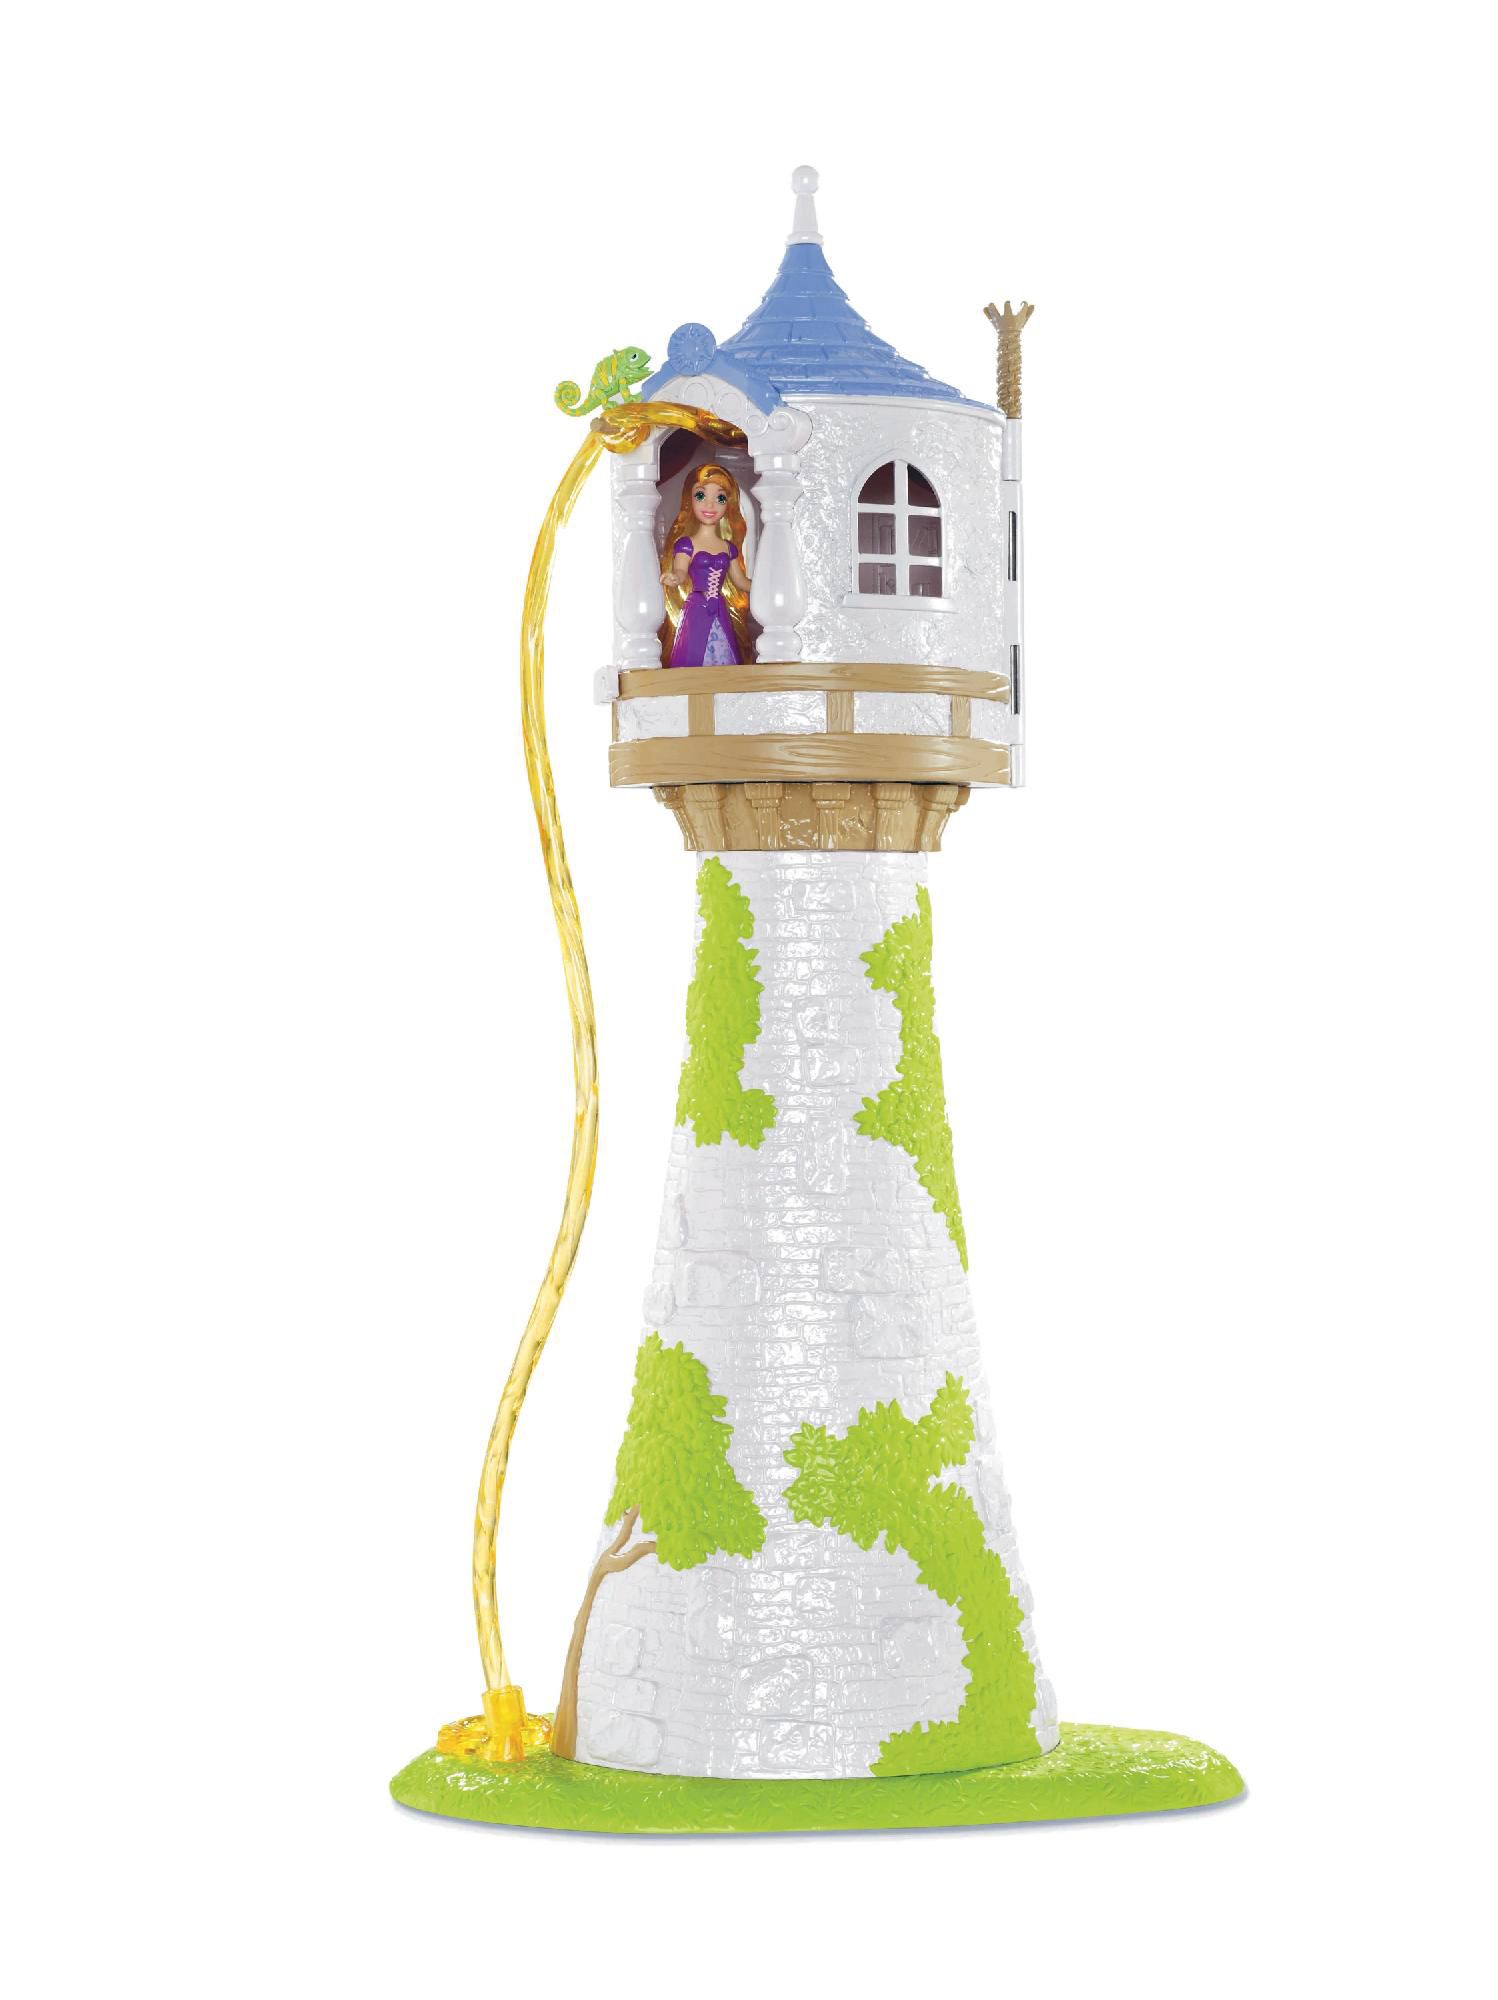 Disney TANGLED Rapunzel s Magical Tower Playset